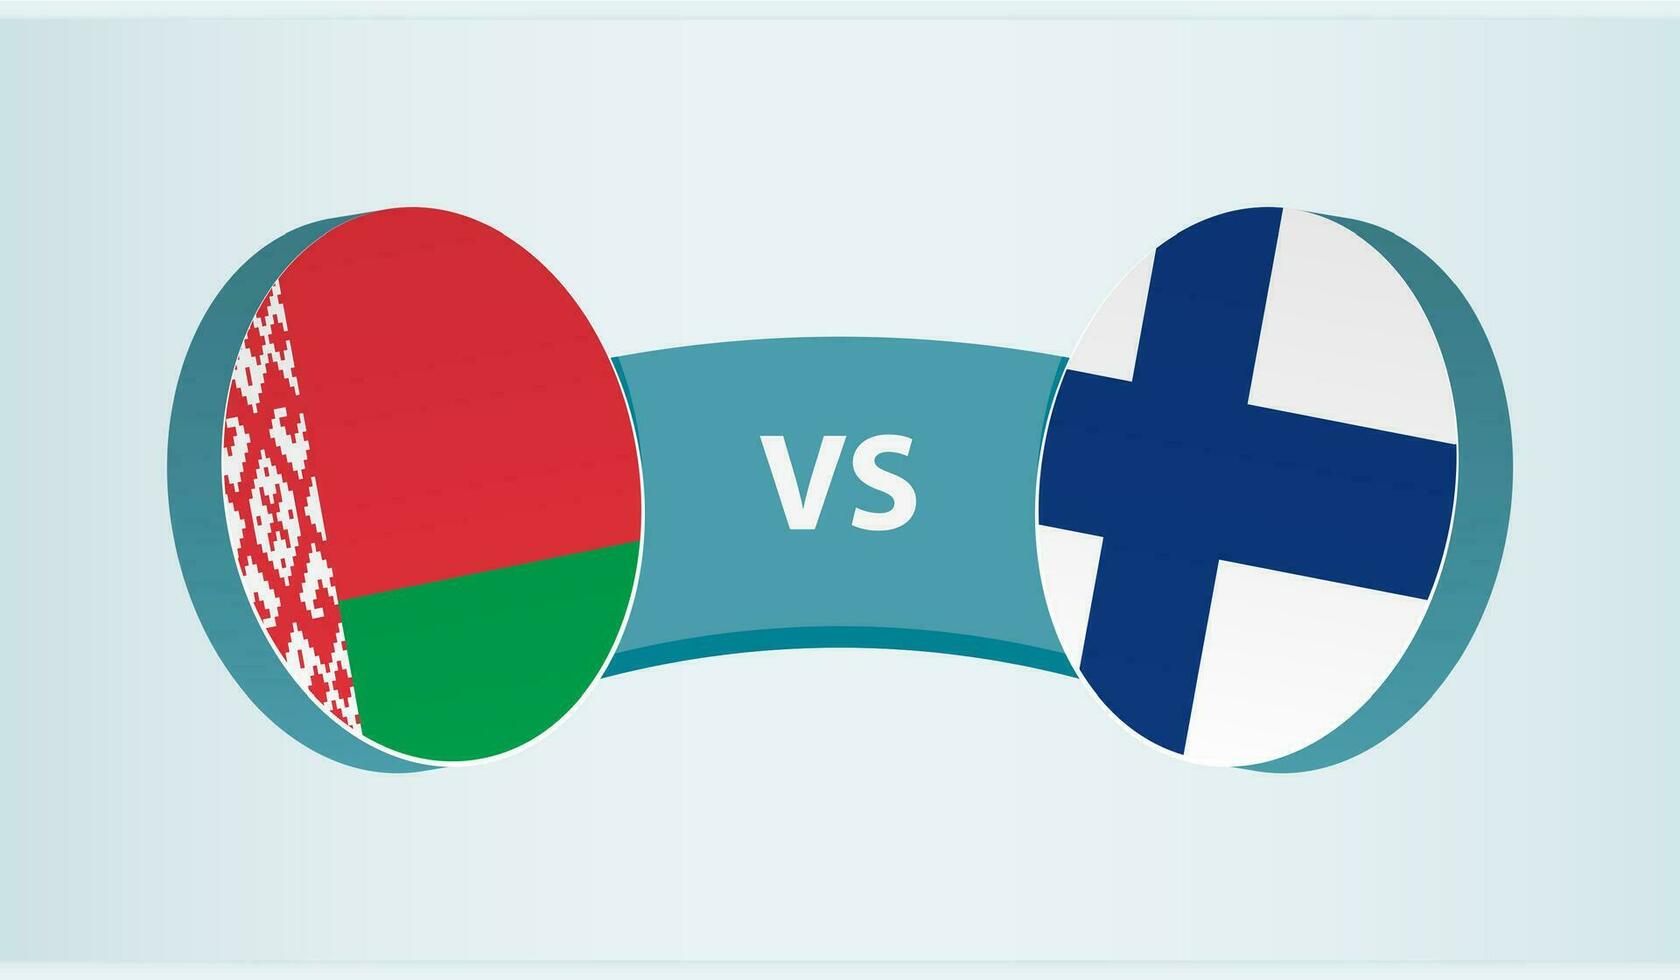 Belarus versus Finland, team sports competition concept. vector